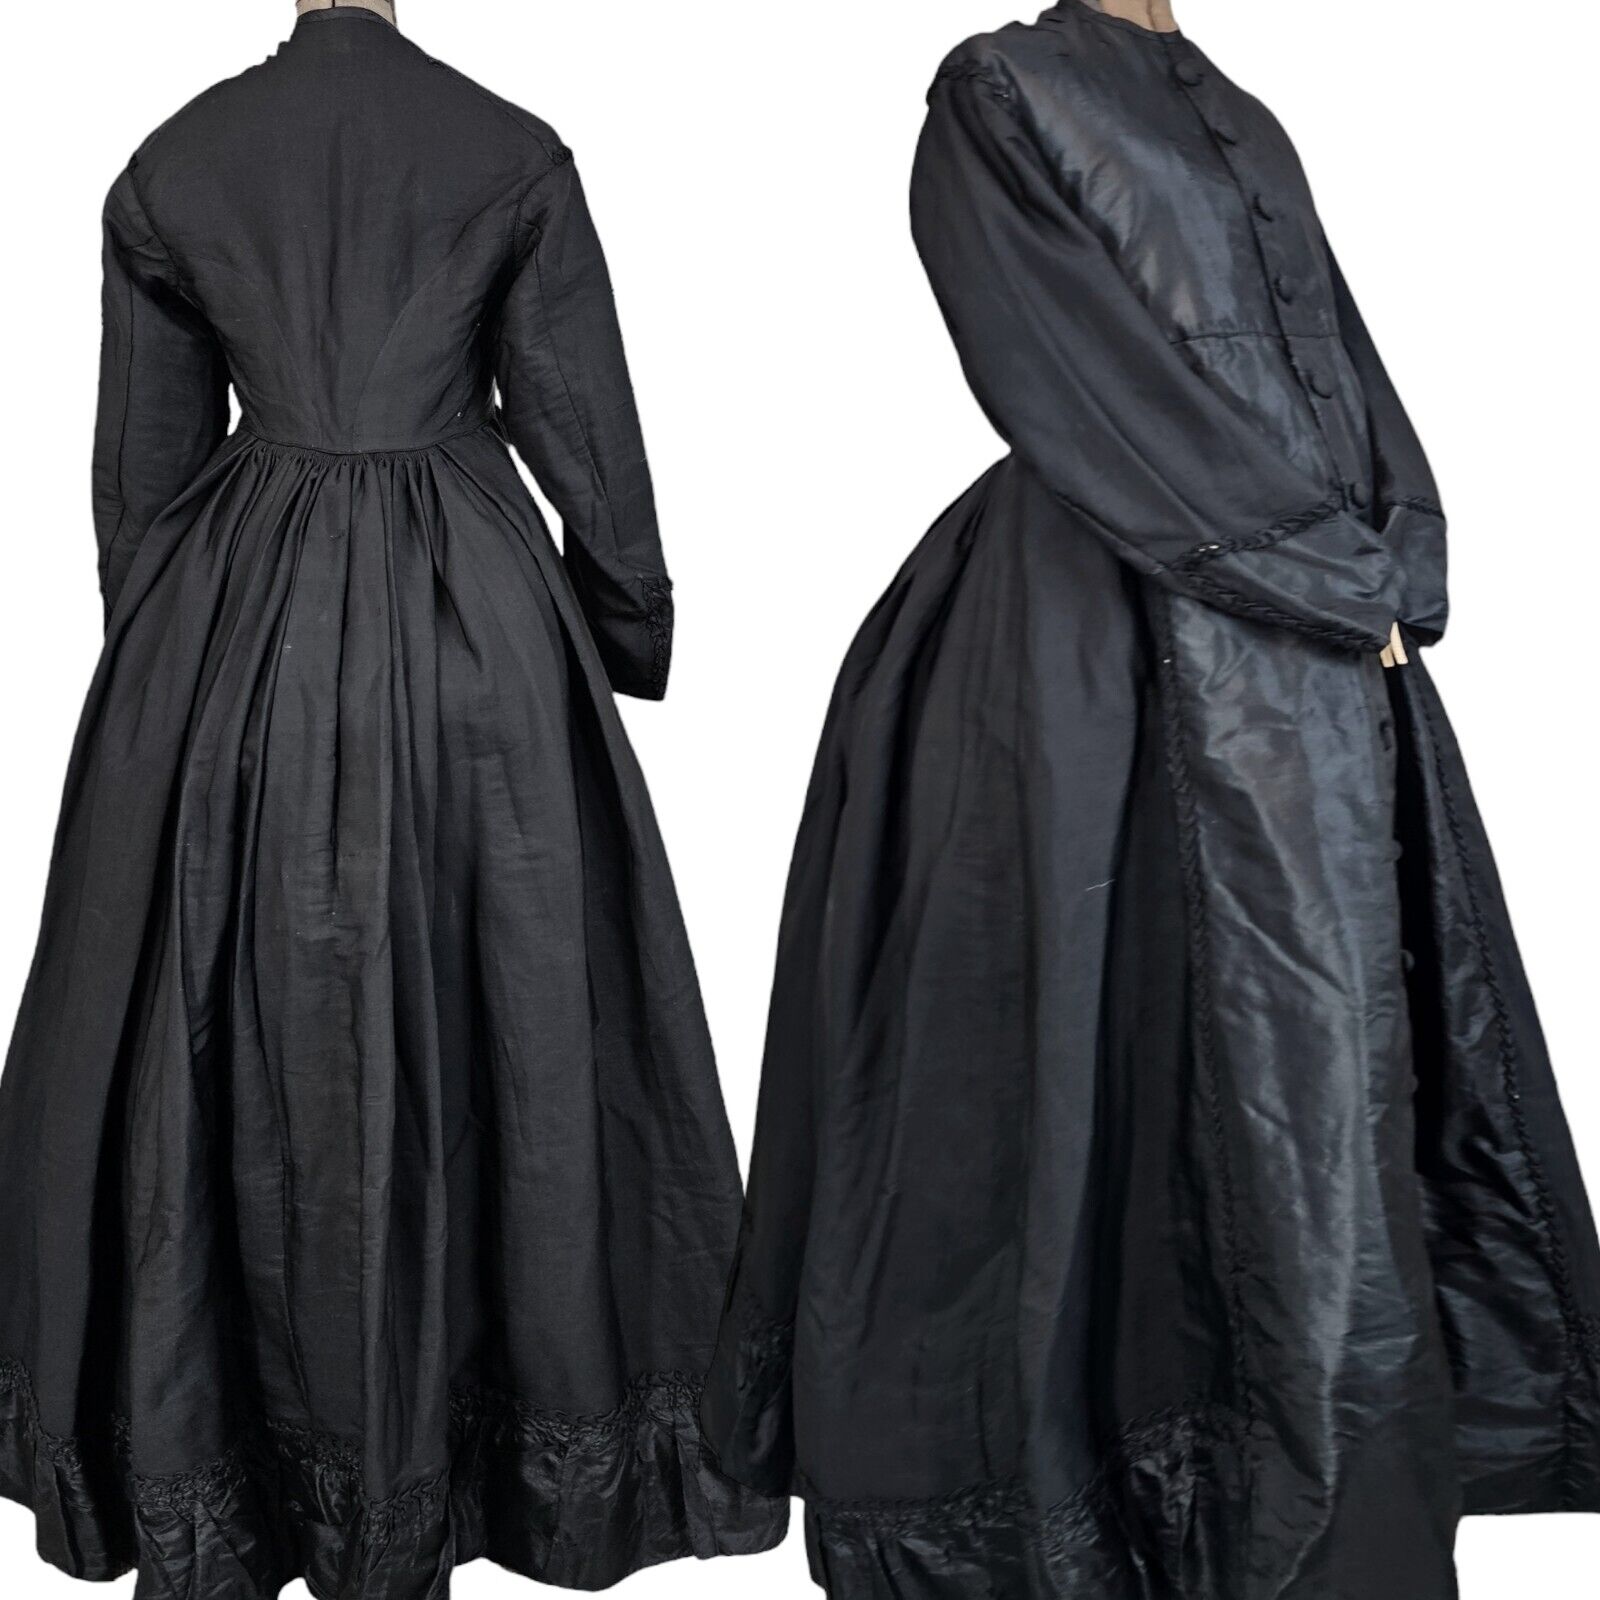 Antique 1850s 1860s Maternity Black Long Maxi Victorian Gown Dress Civil War Era